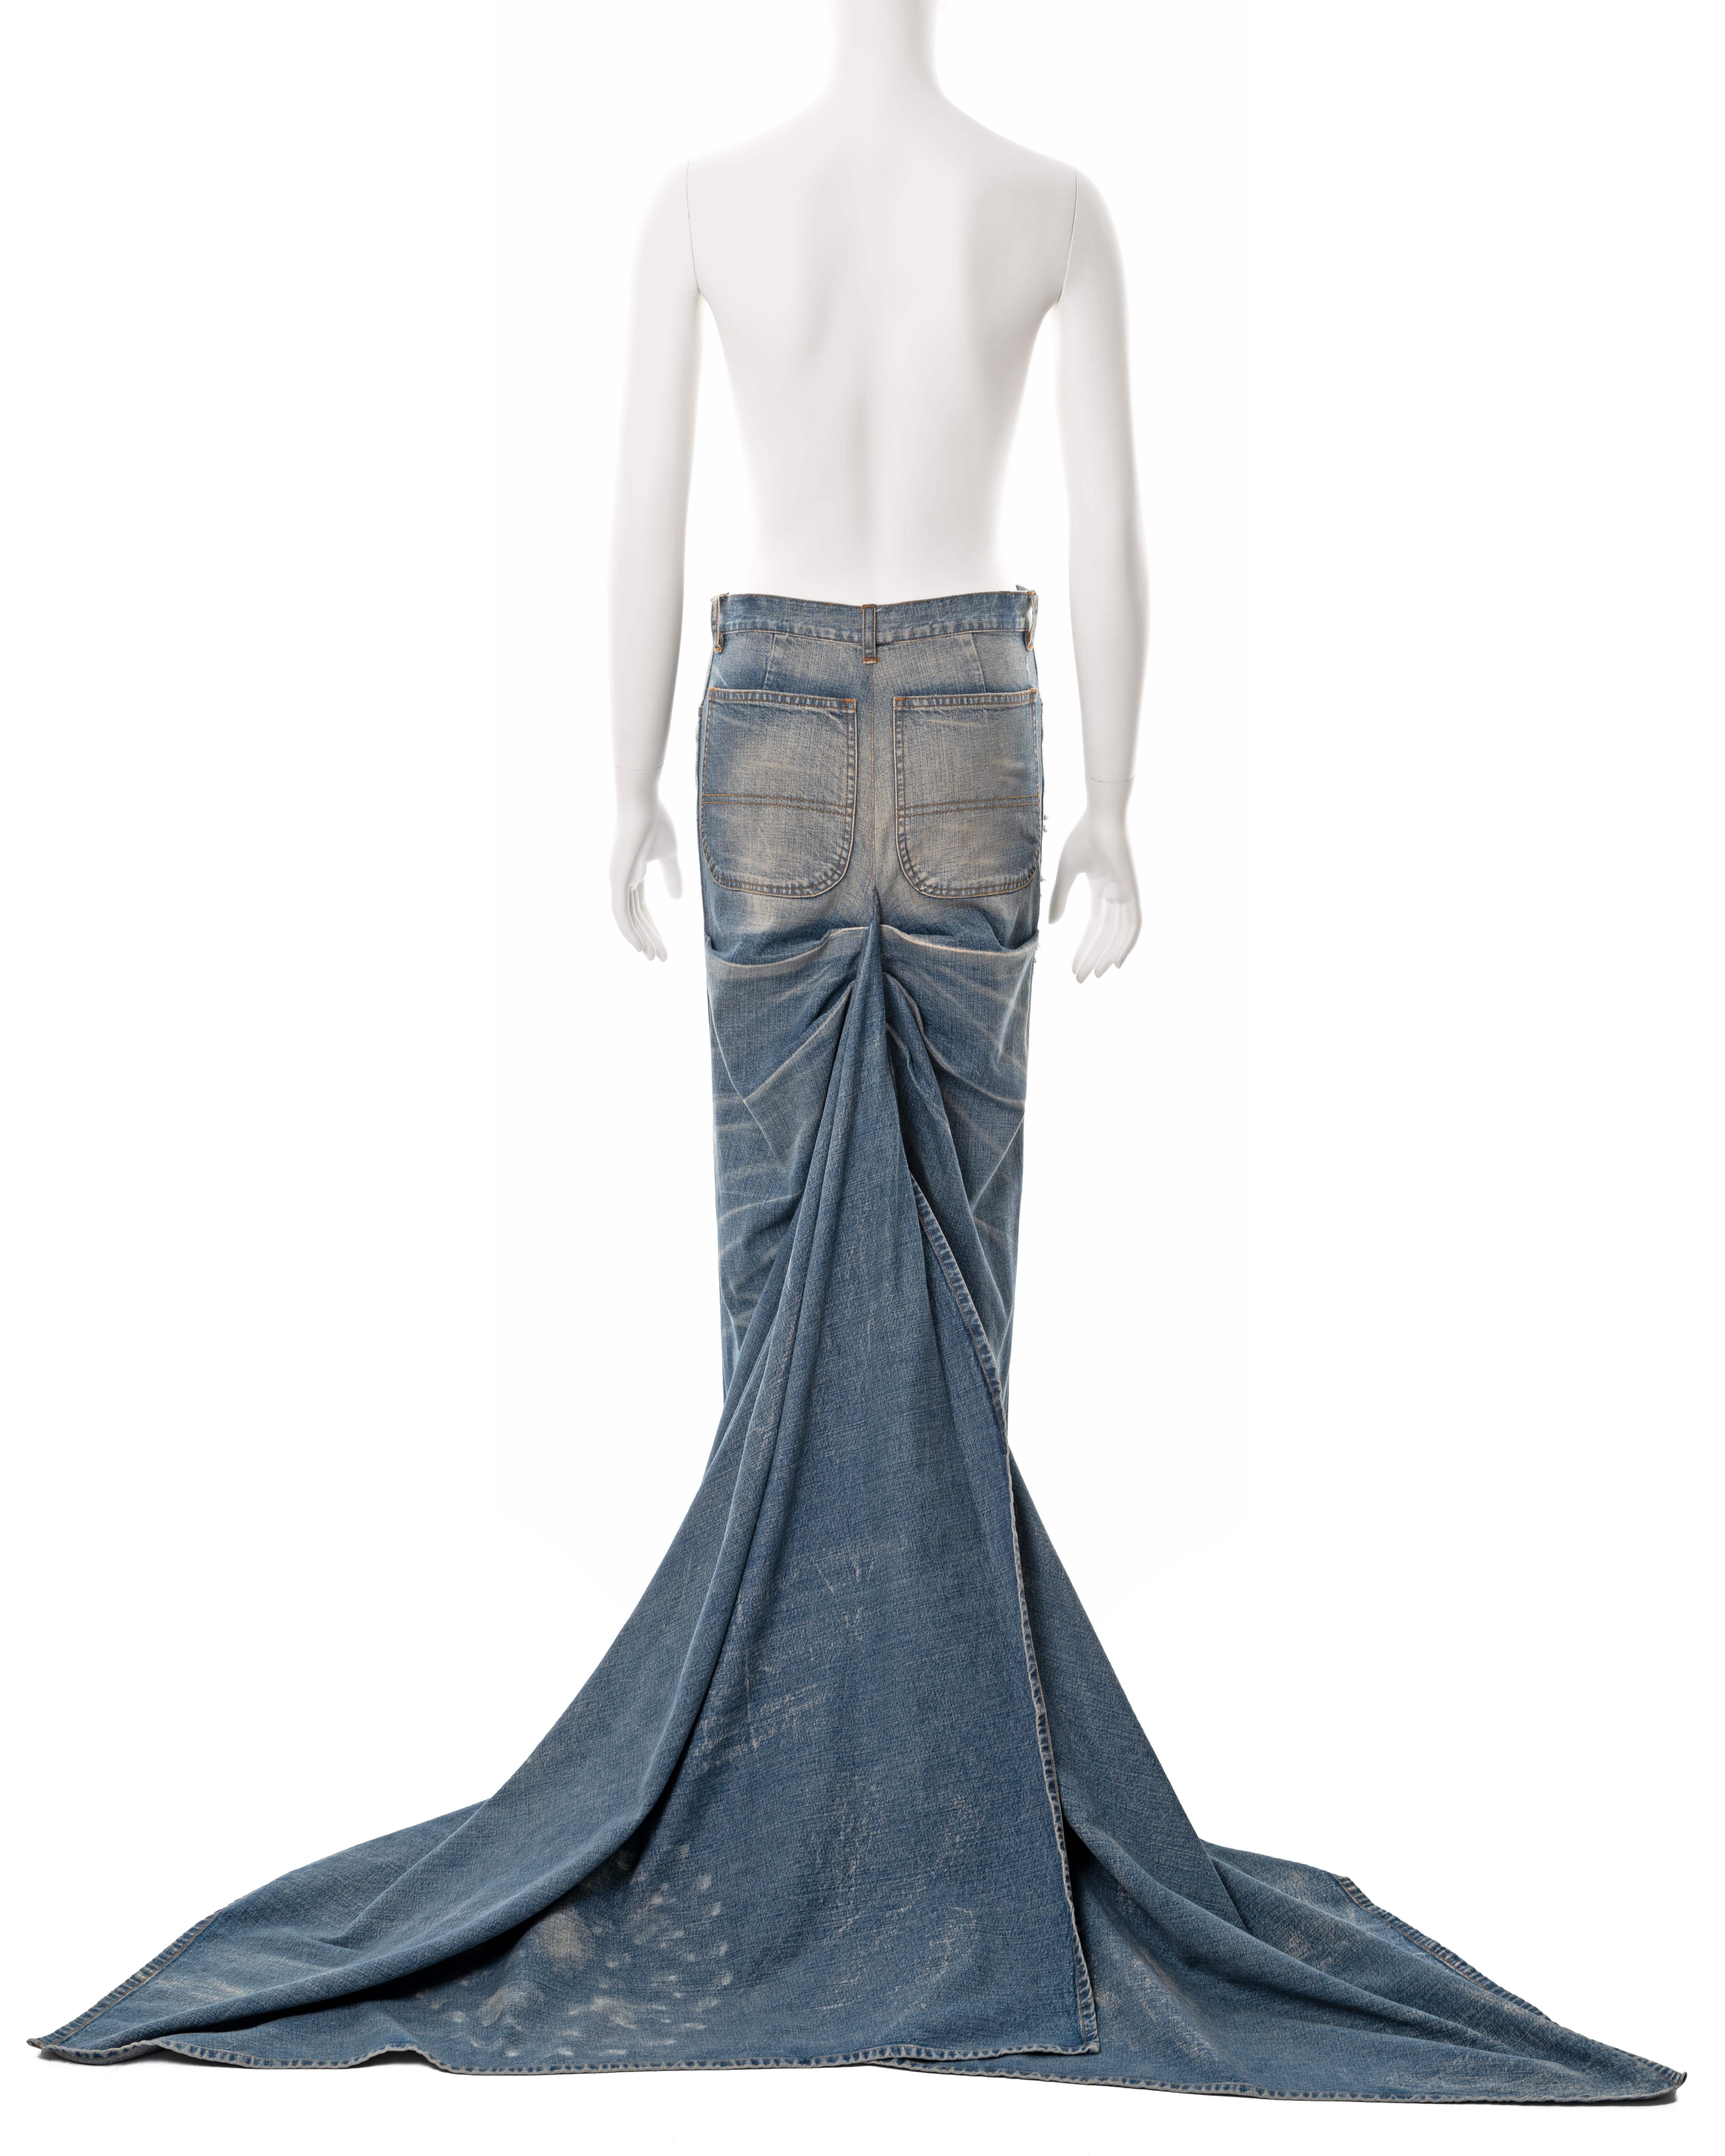 Ralph Lauren sandwashed denim maxi skirt with train, ss 2003 2